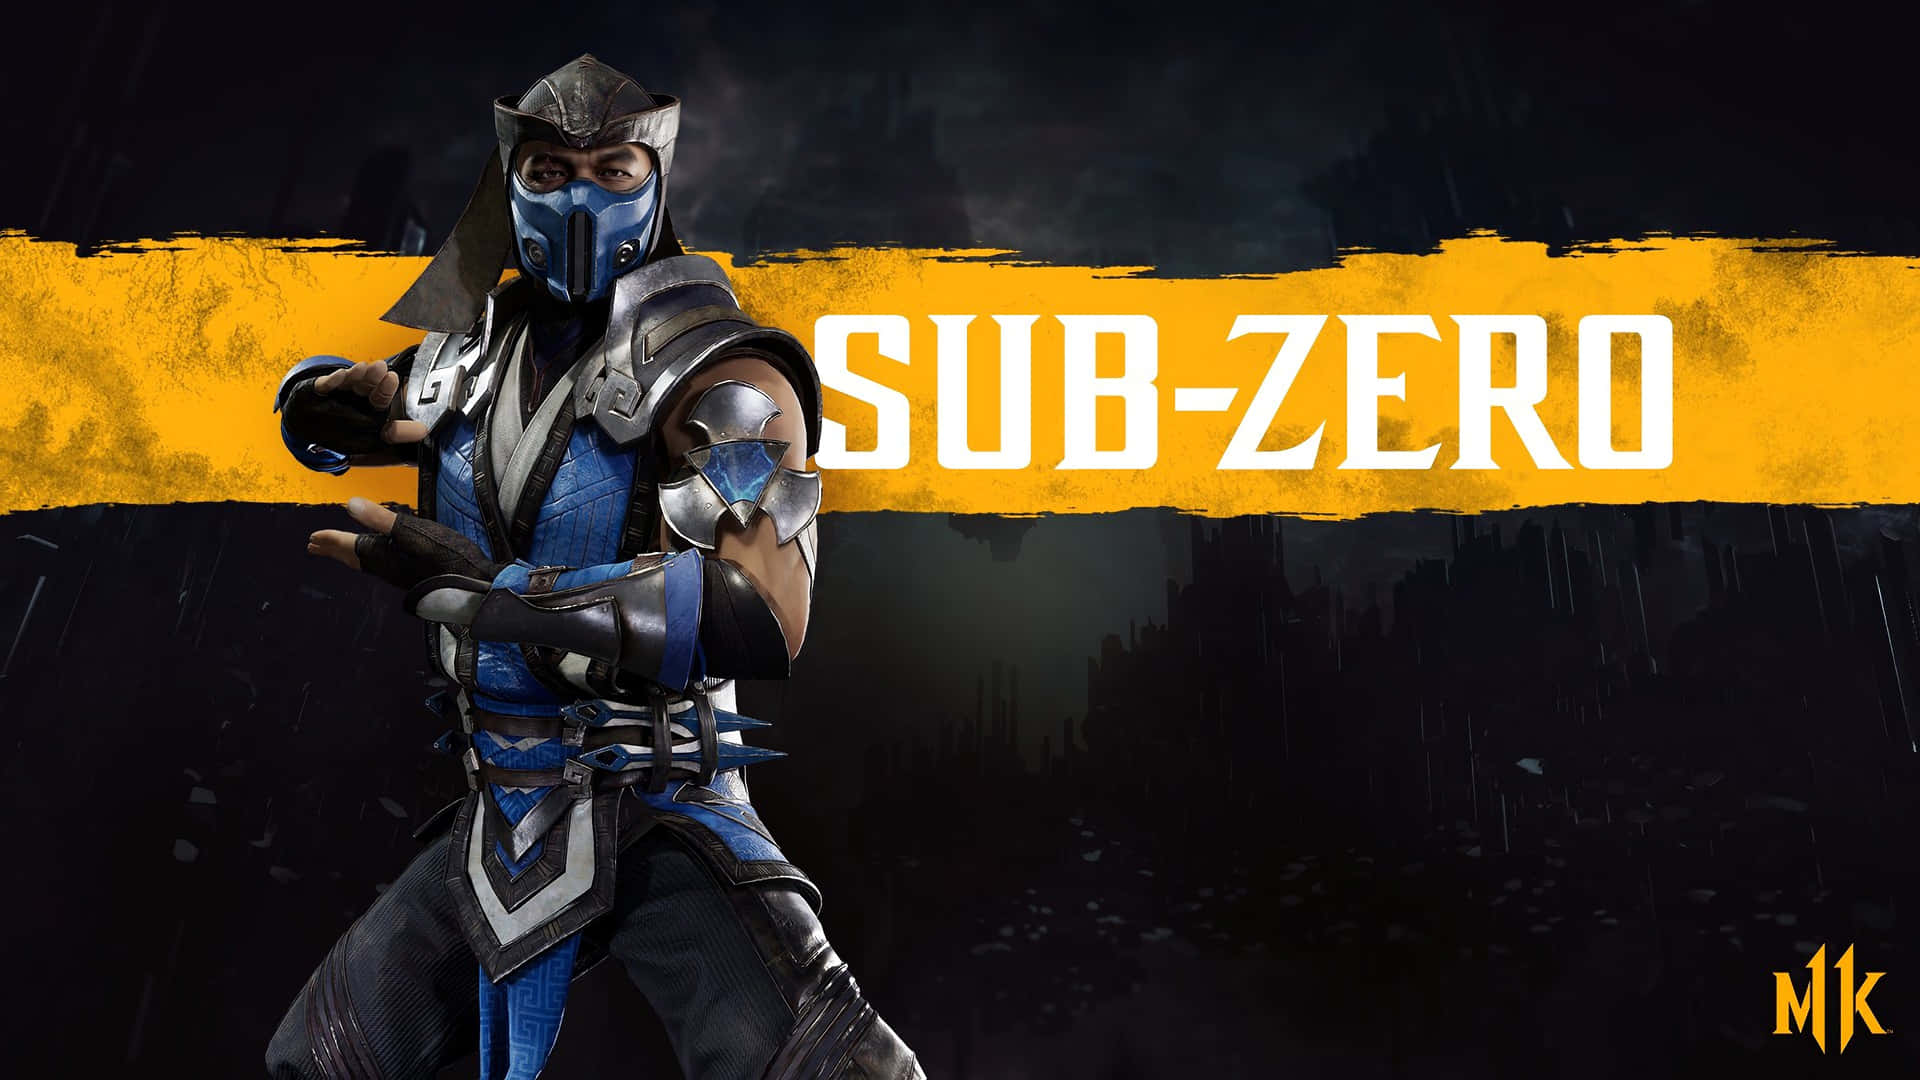 Sub-Zero unleashes his ice powers in Mortal Kombat Wallpaper